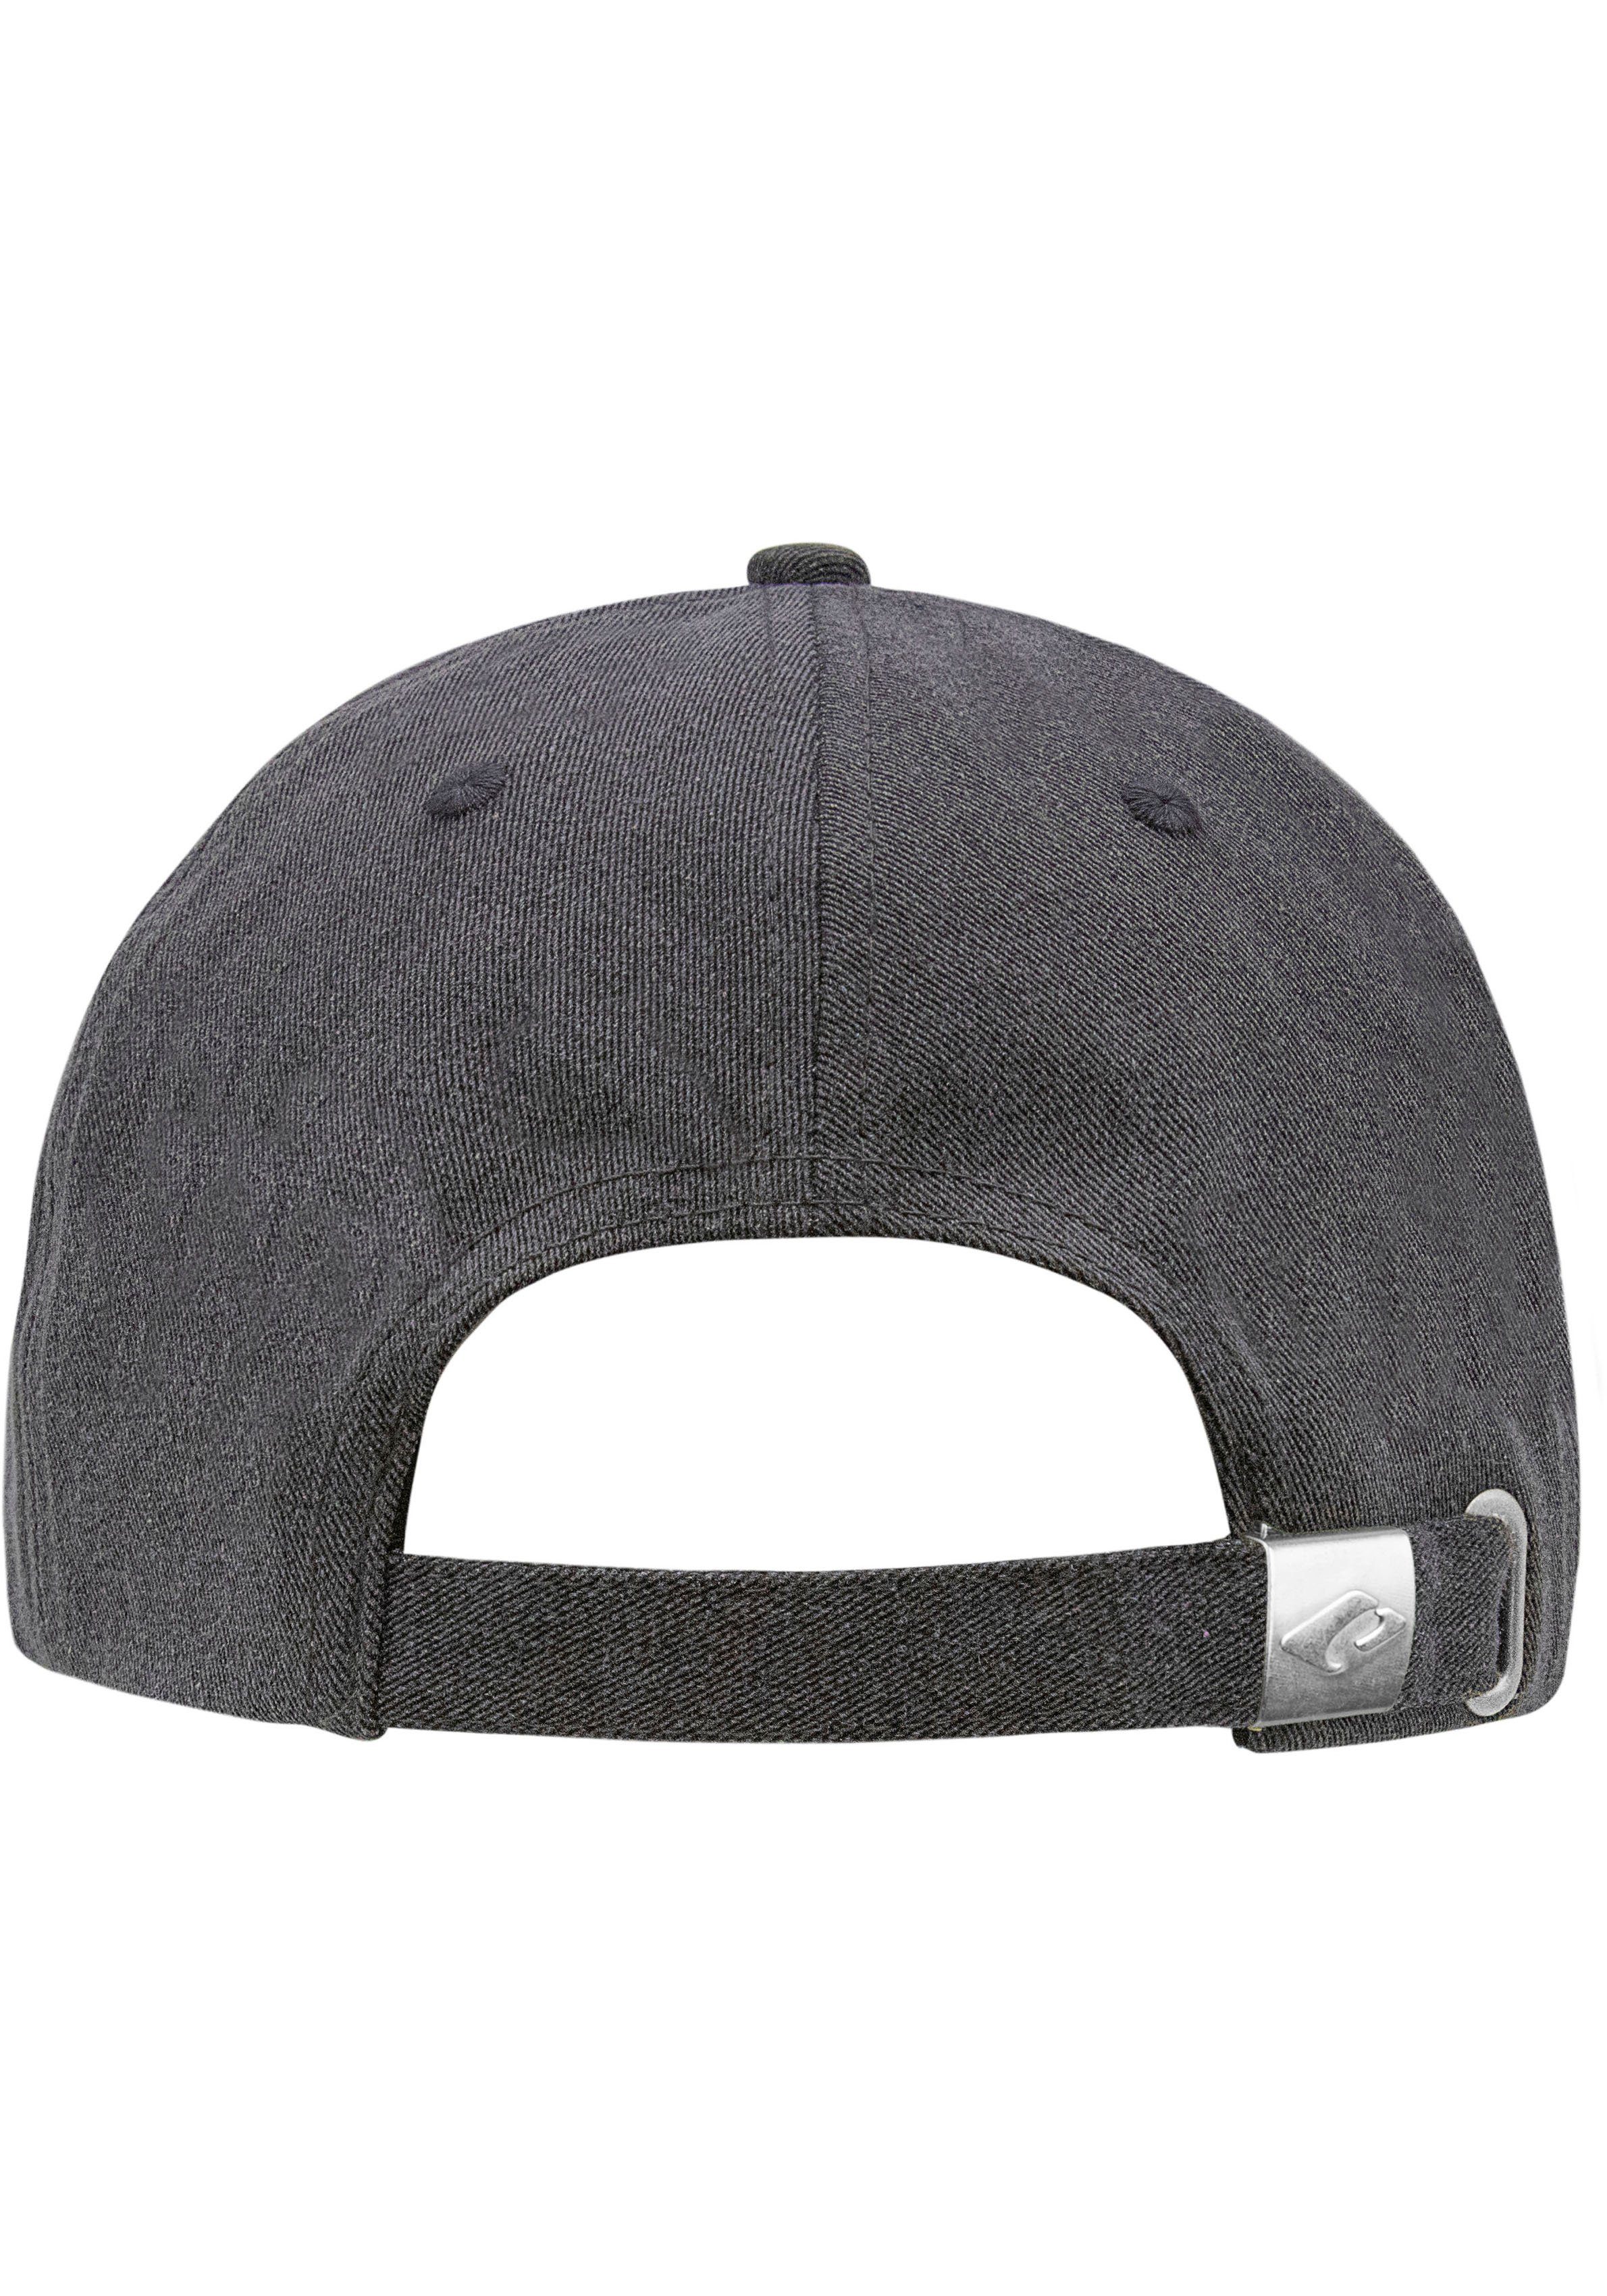 Baseball Arklow dunkelgrau chillouts Hat Cap